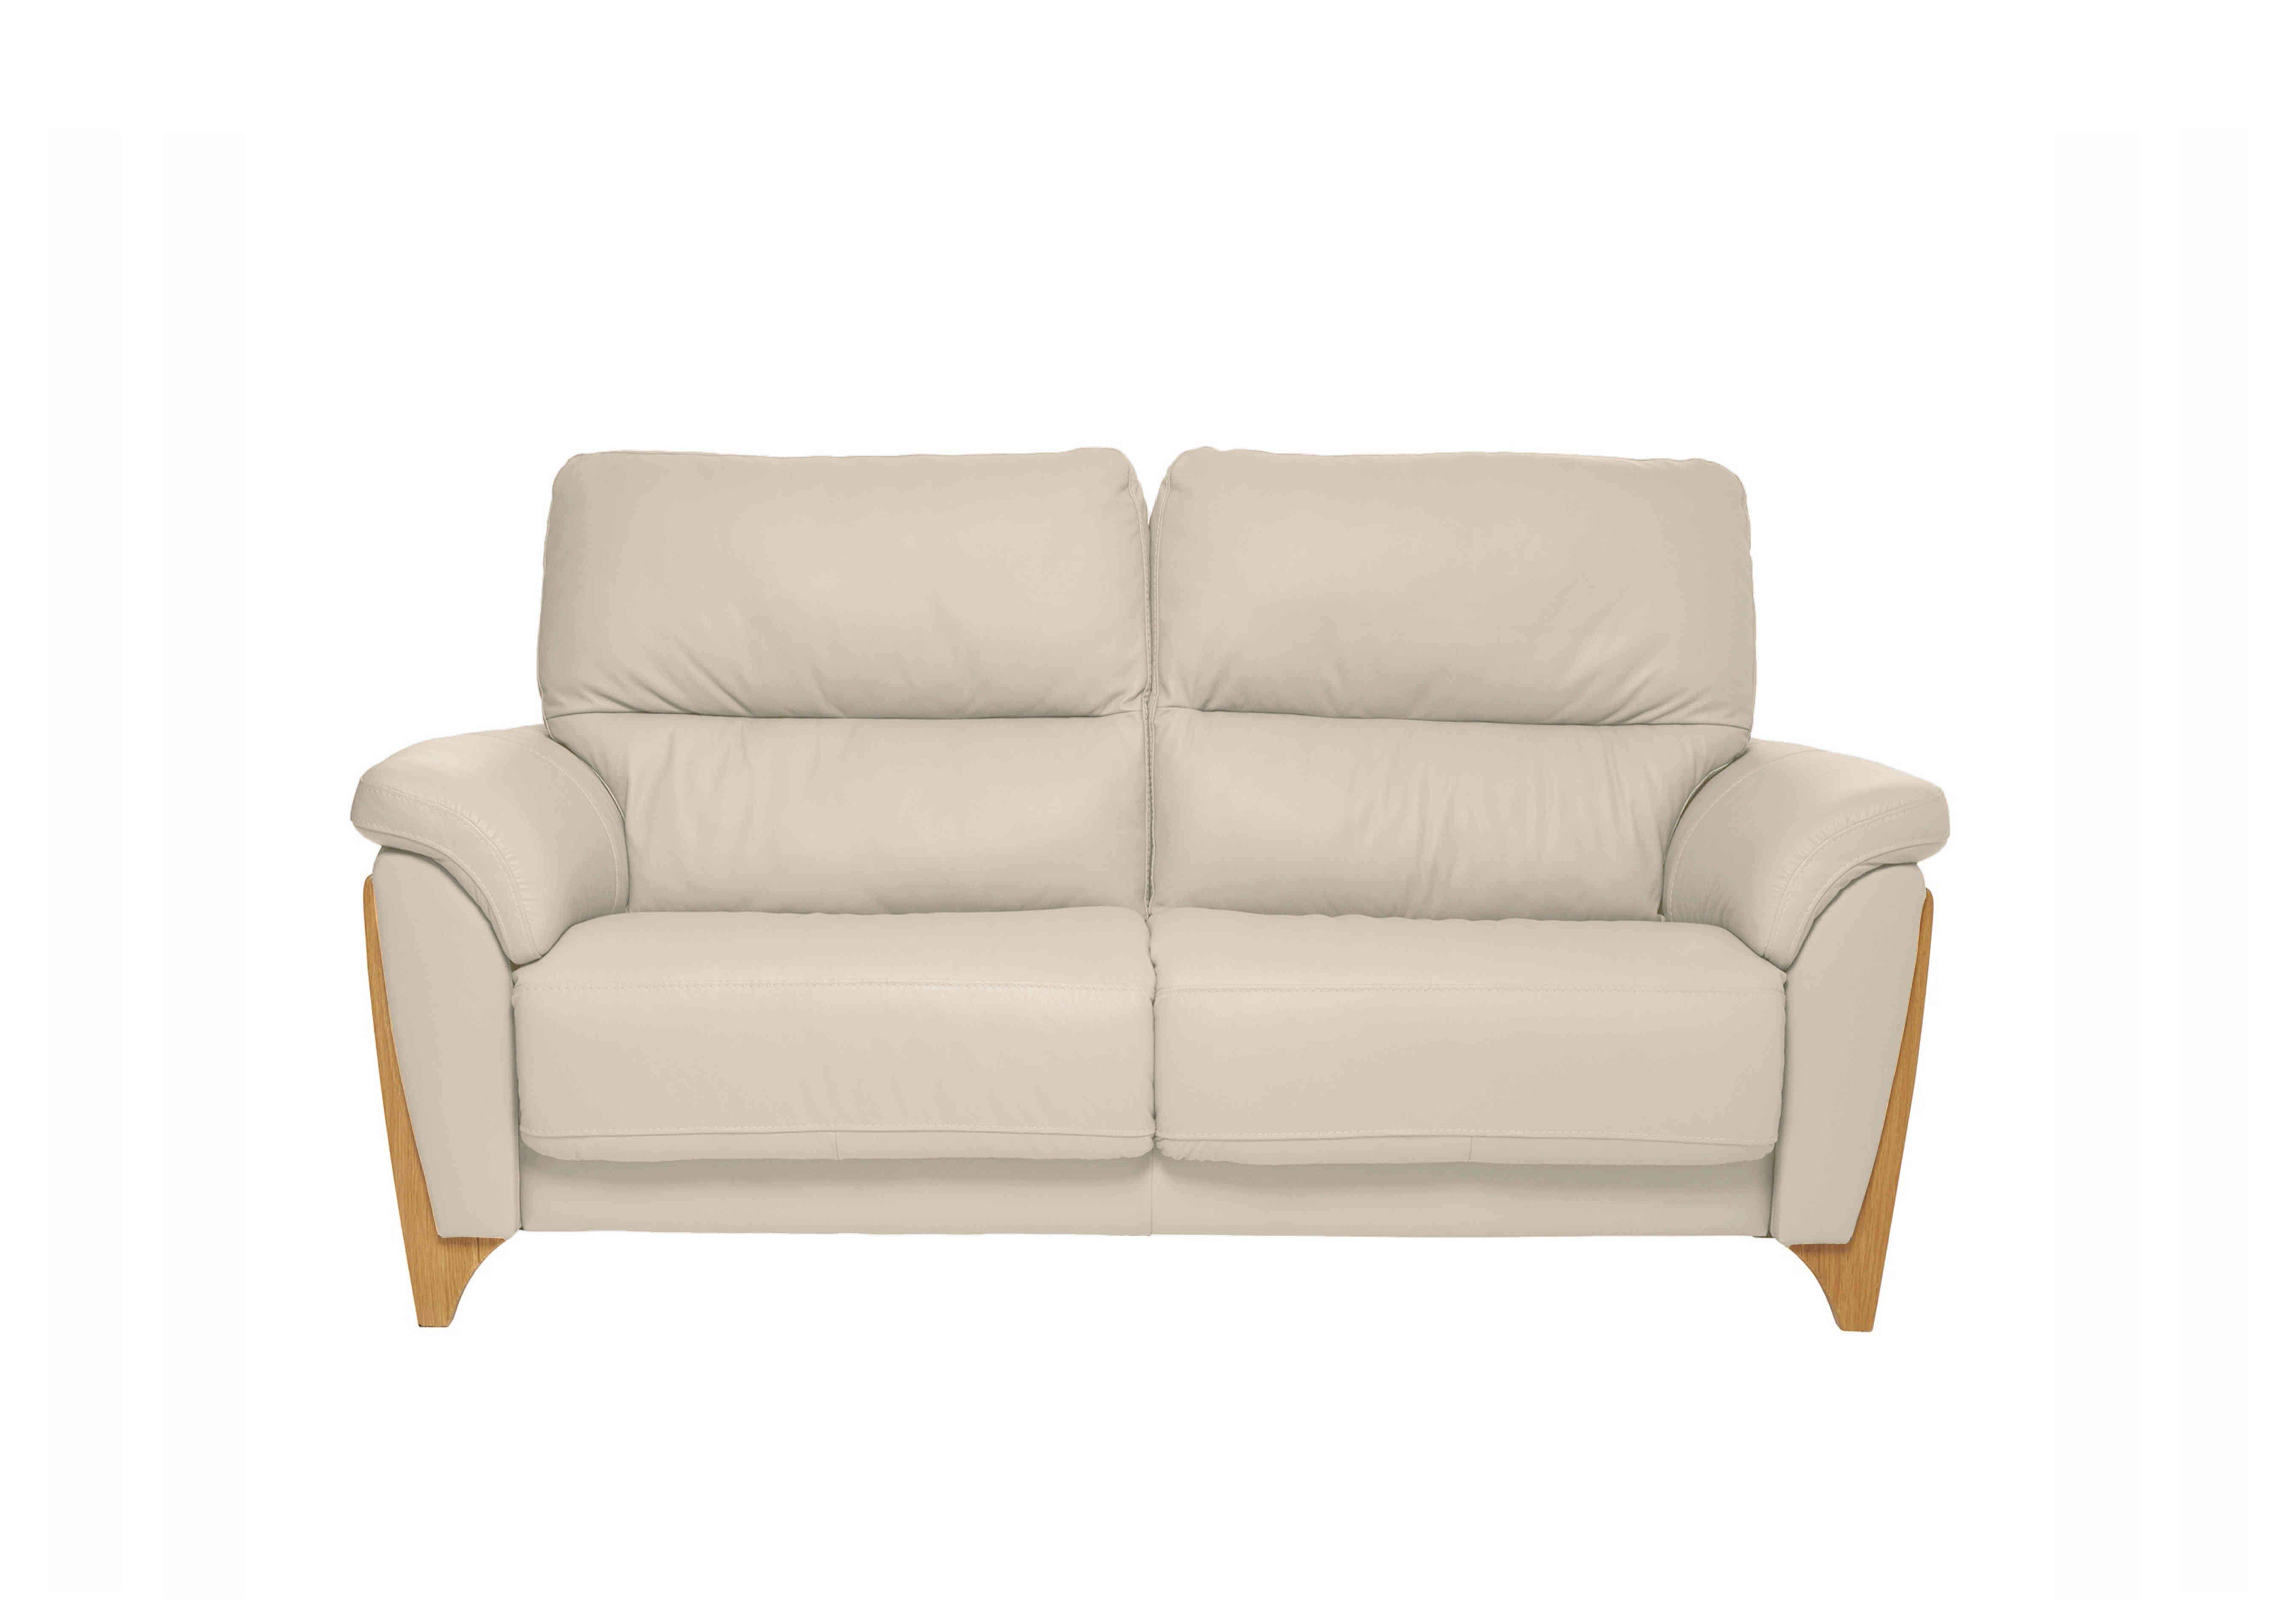 Enna Medium Leather Sofa in L904 on Furniture Village